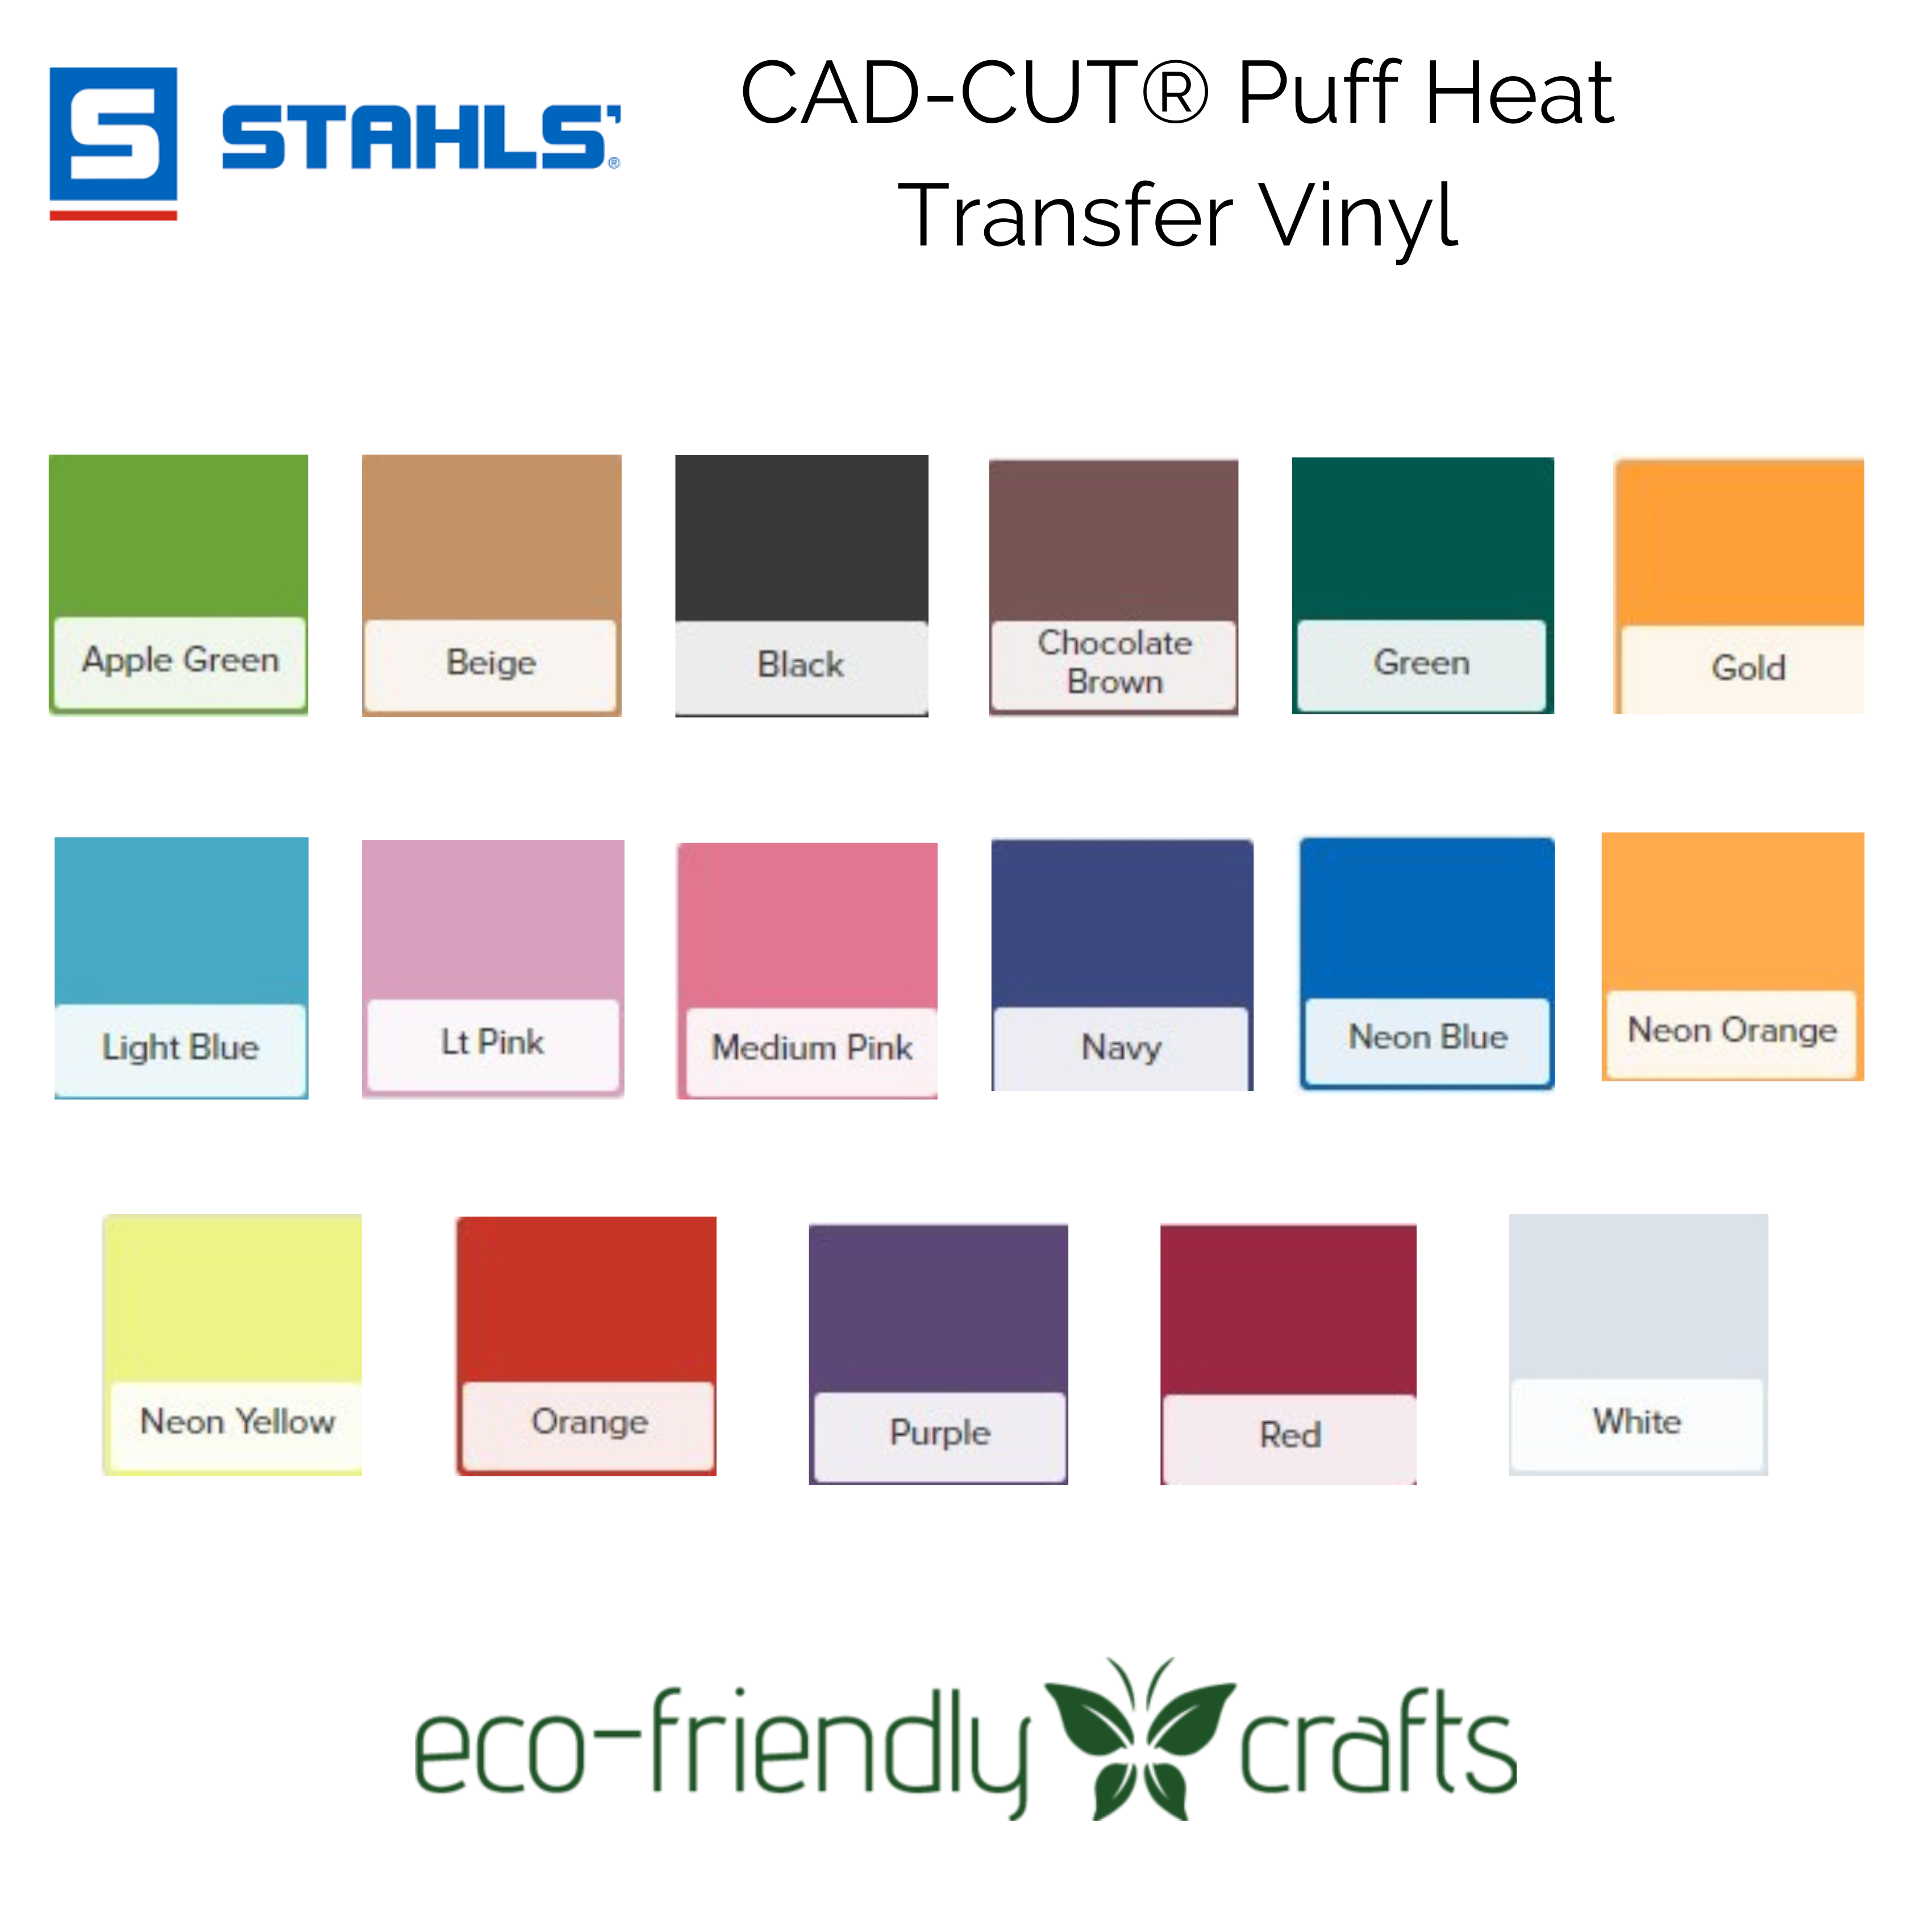 CAD Color Printable Heat Transfer Vinyl - CAD Cut Heat Transfer Vinyl